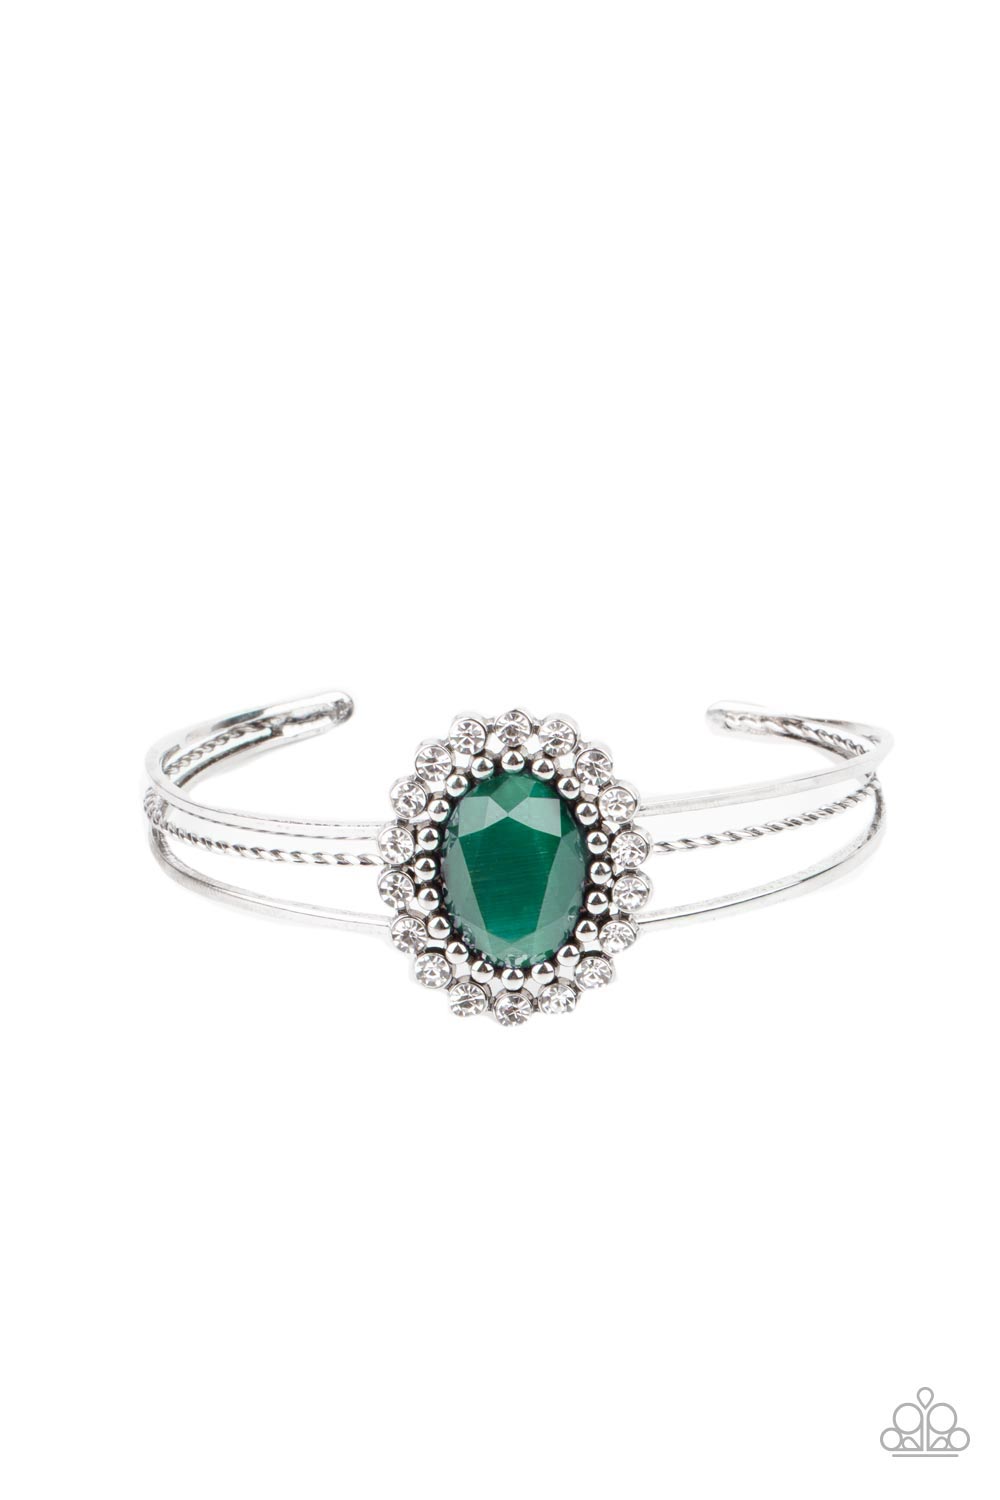 five-dollar-jewelry-prismatic-flower-patch-green-bracelet-paparazzi-accessories